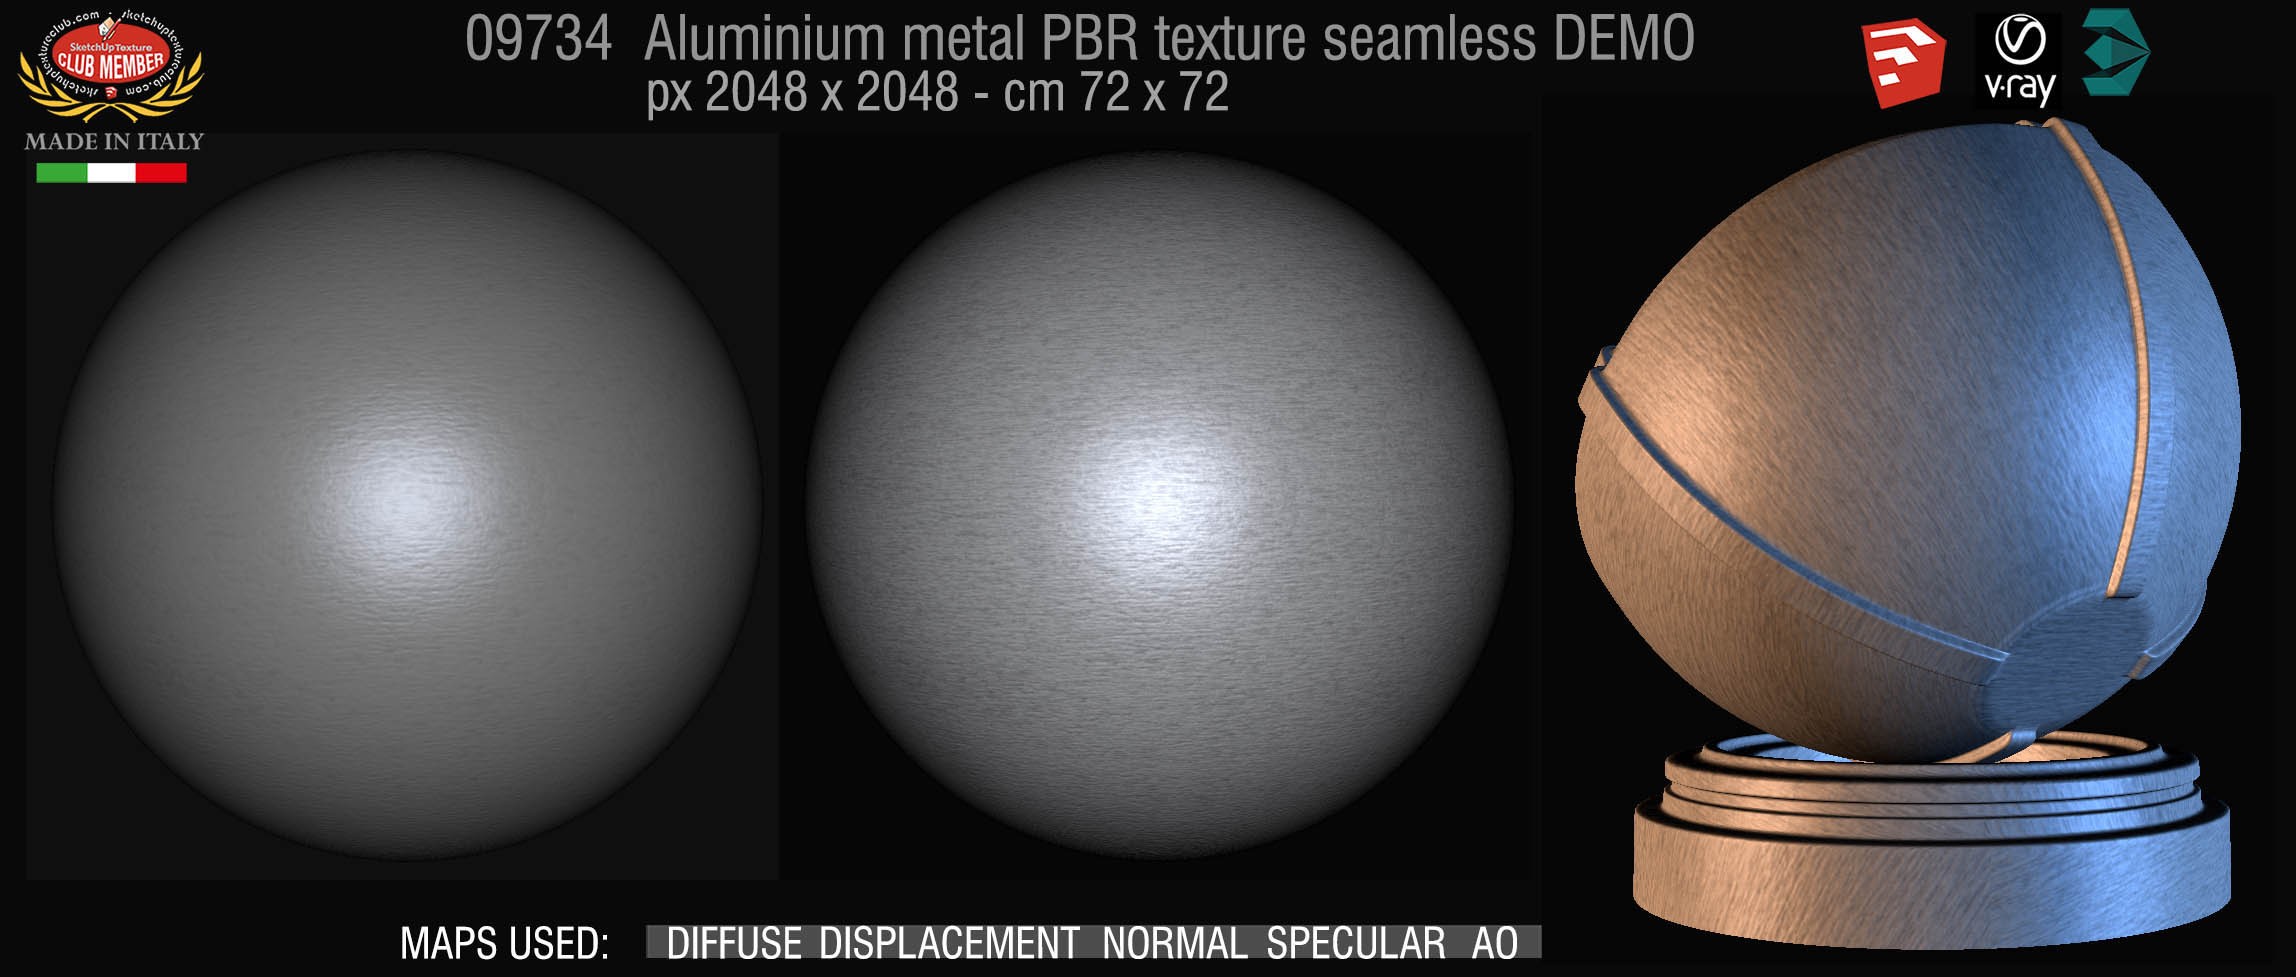 09734 Aluminium metal PBR texture seamless DEMO